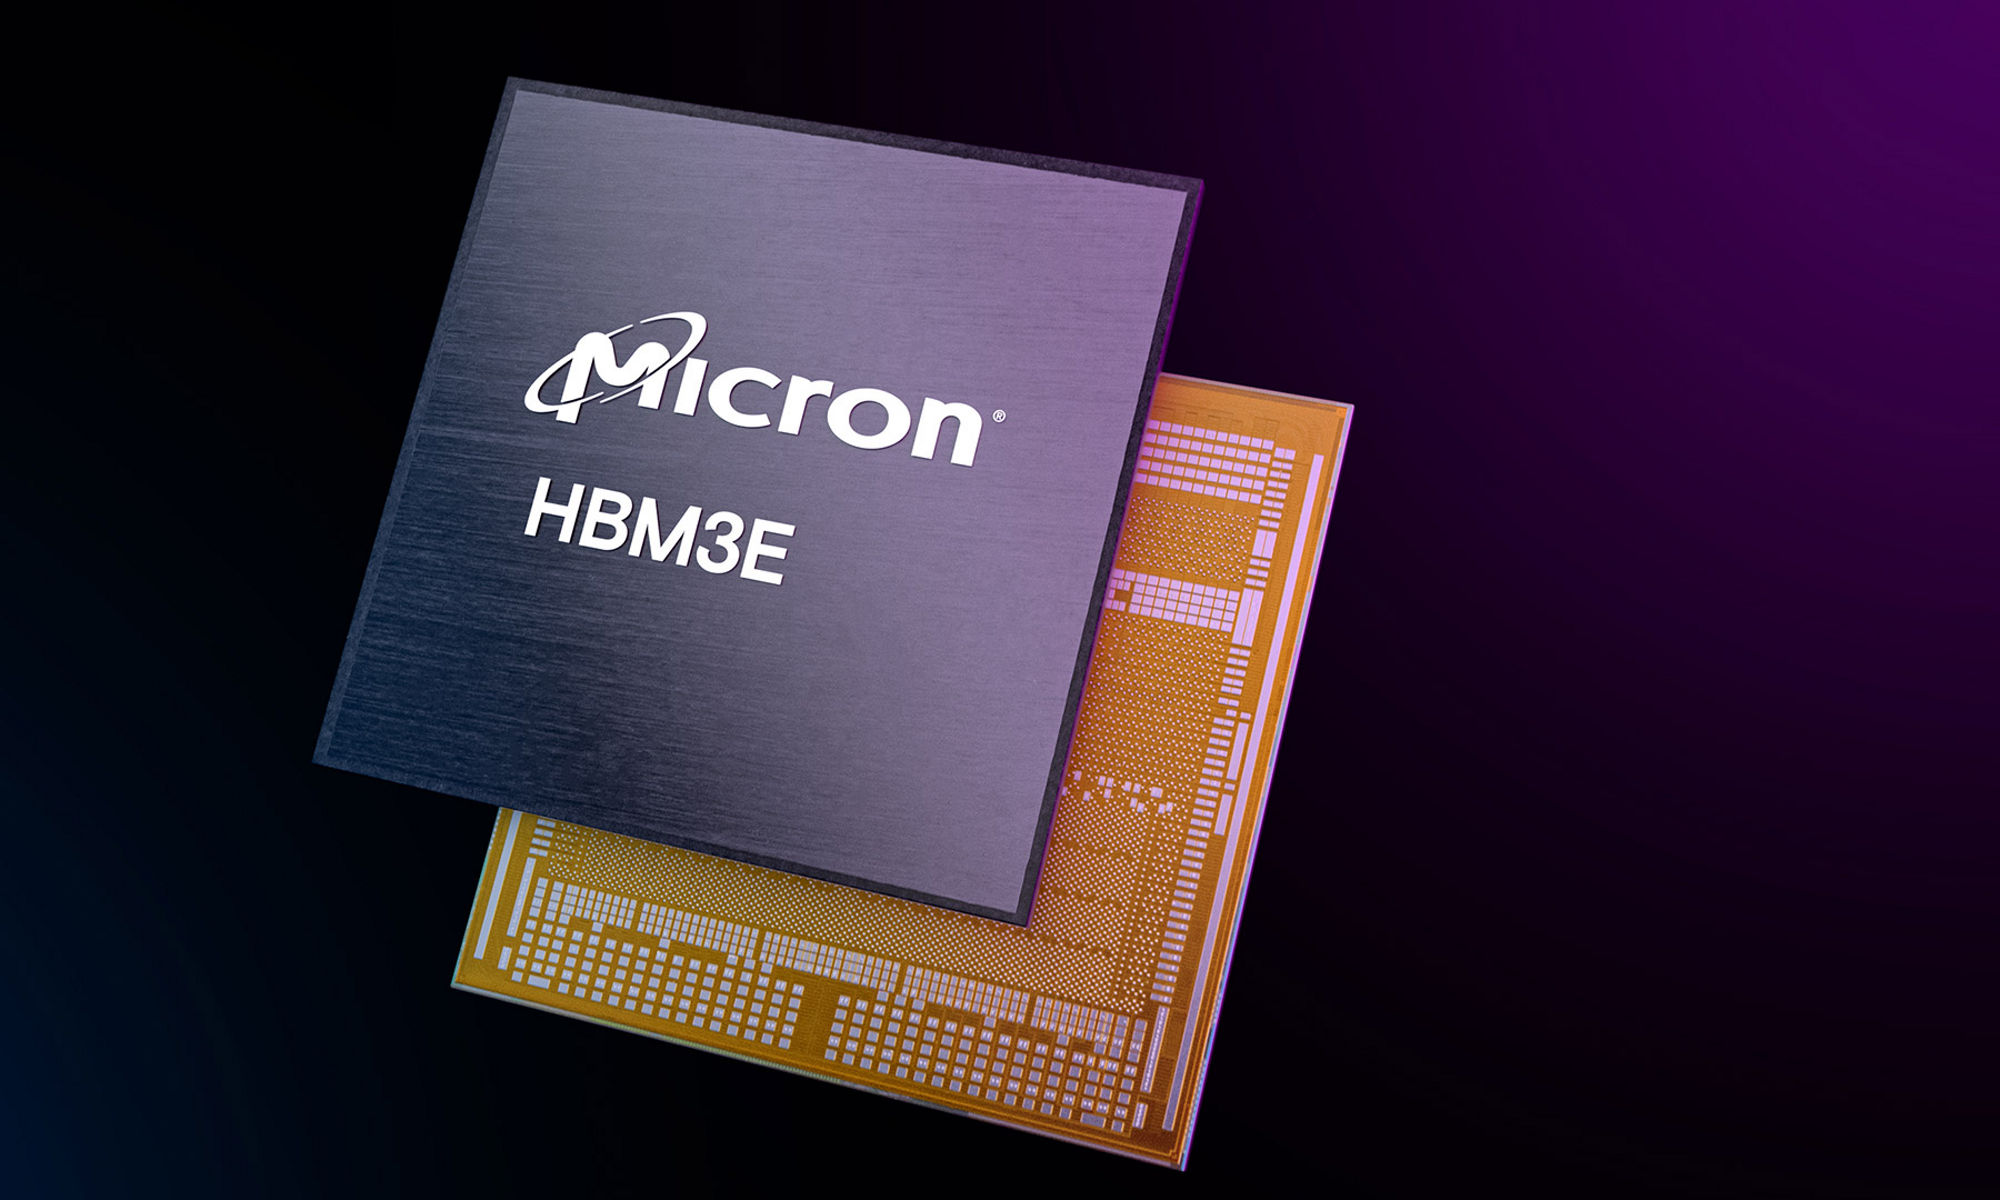 Micron HBM3E memory